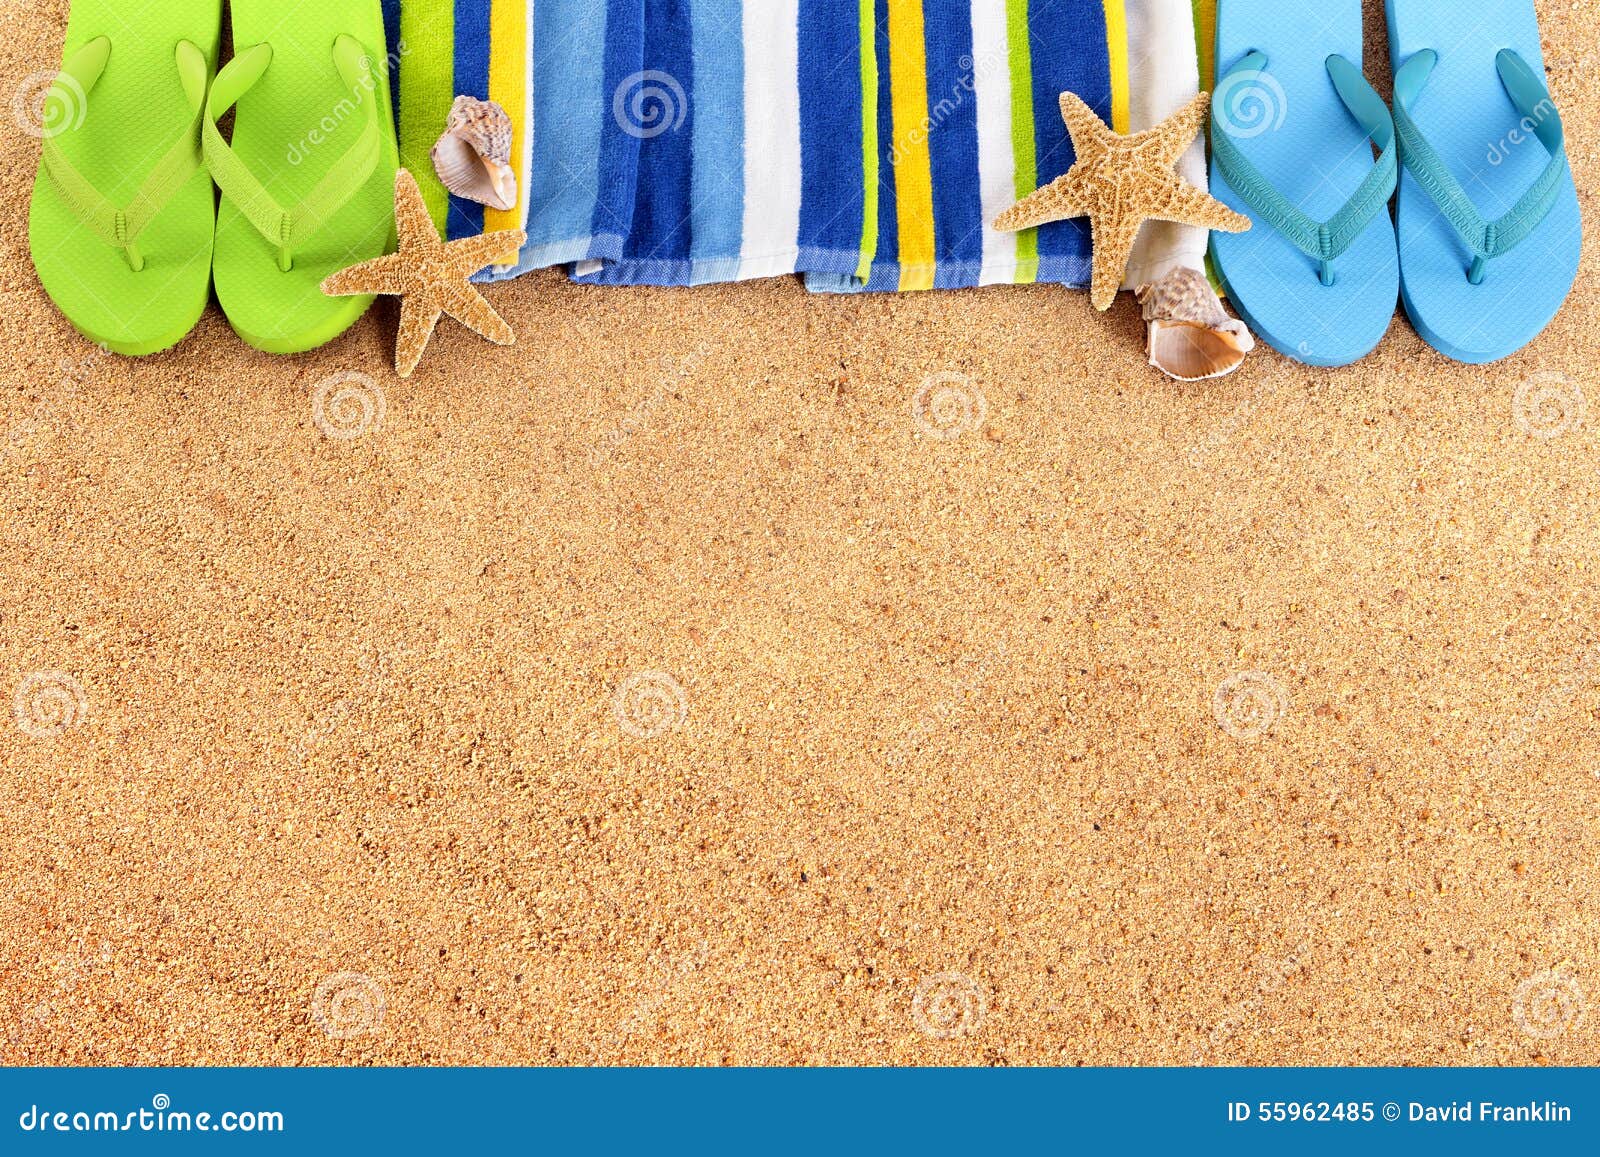 Beach Border, Flip Flops, Sand Background, Copy Space Stock Image ...